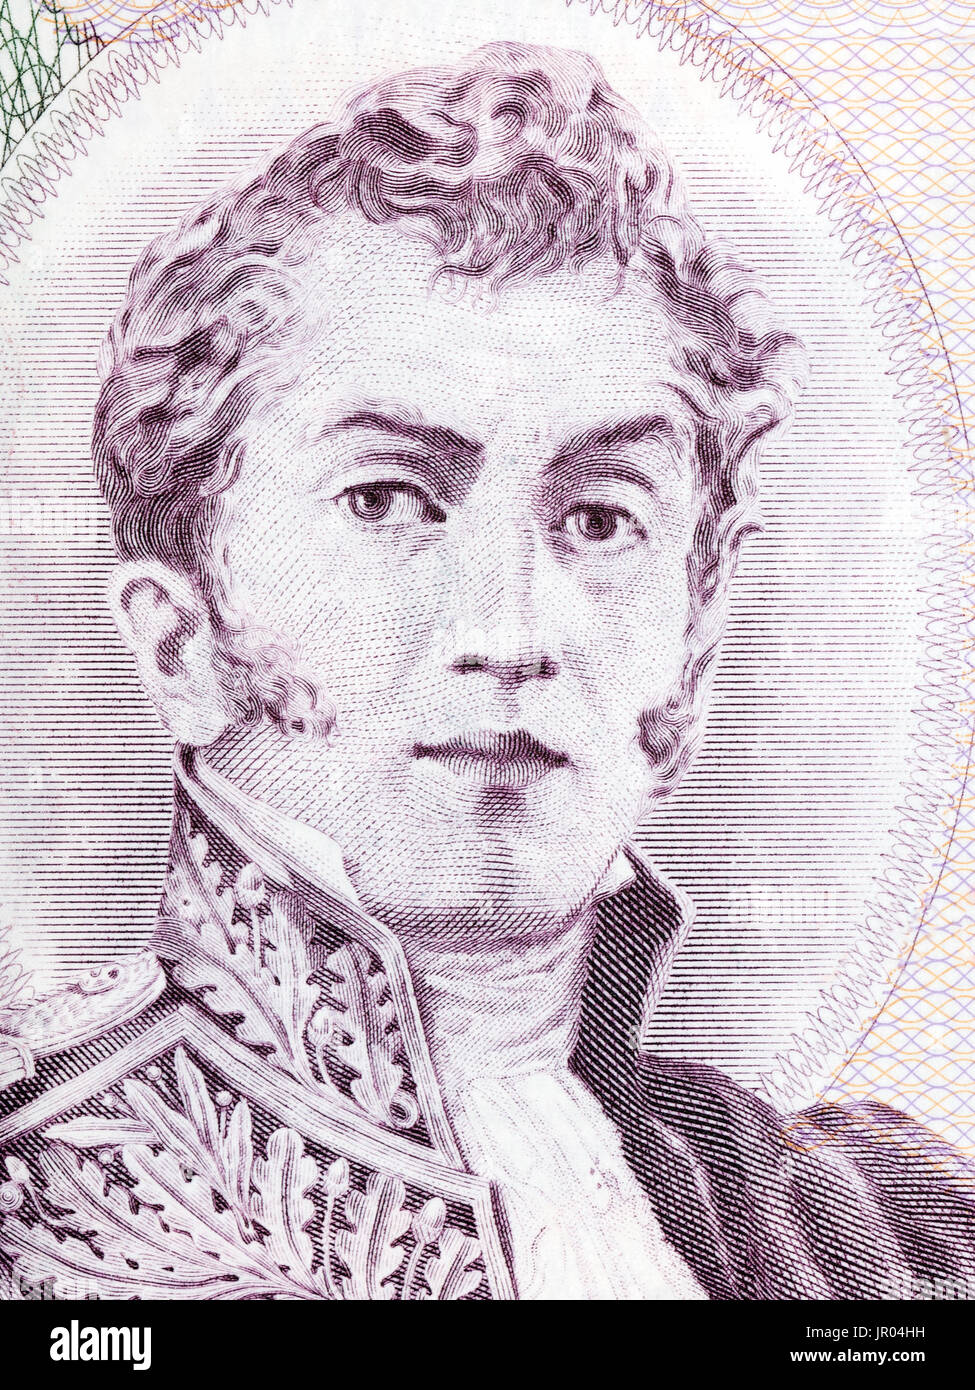 Antonio Narino portrait from Colombian money Stock Photo